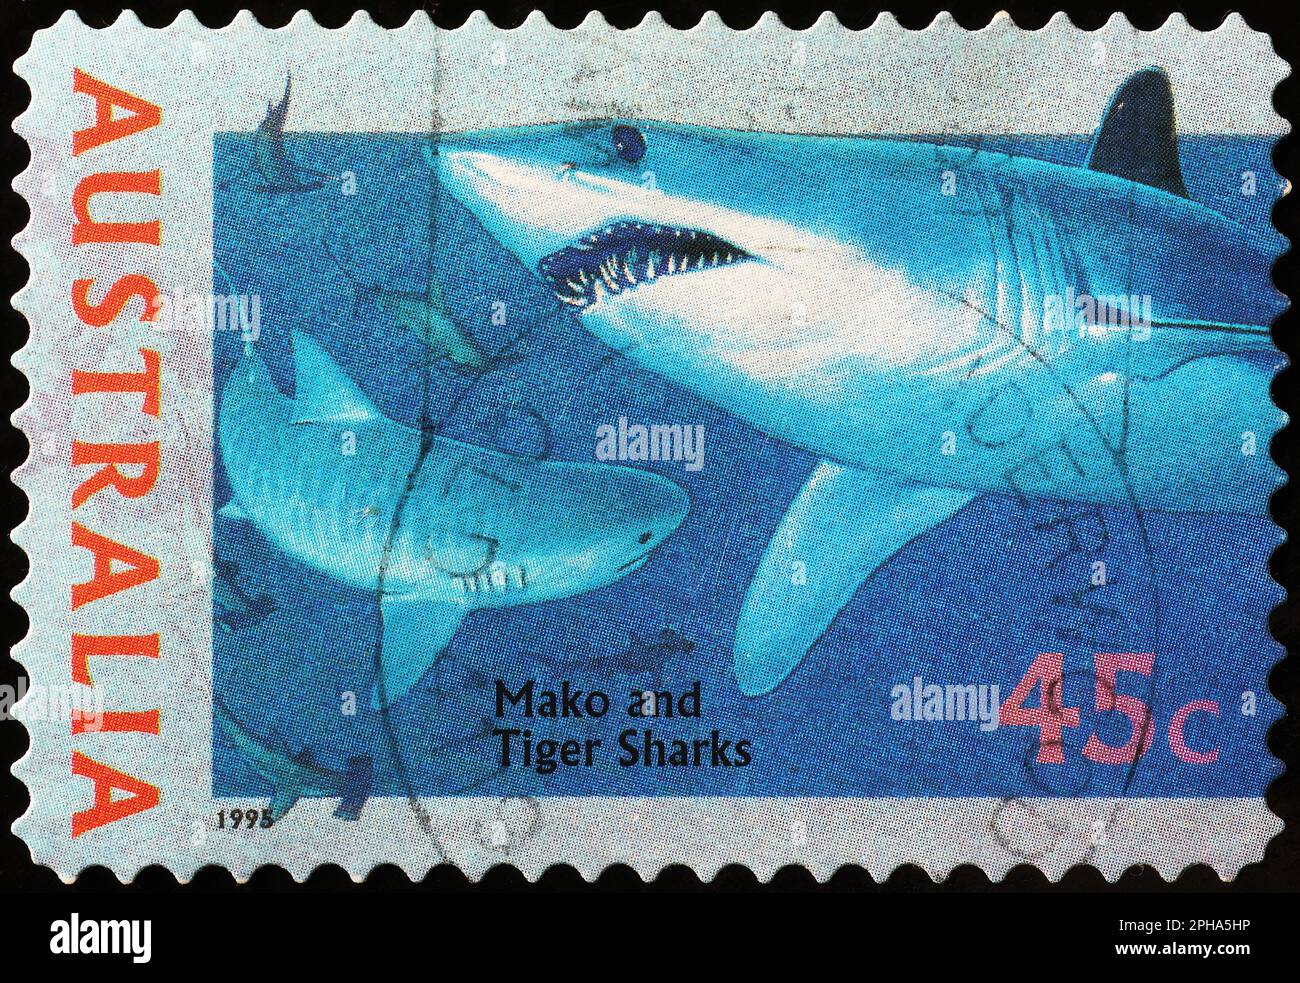 Mako and tiger sharks on australian postage stamp Stock Photo